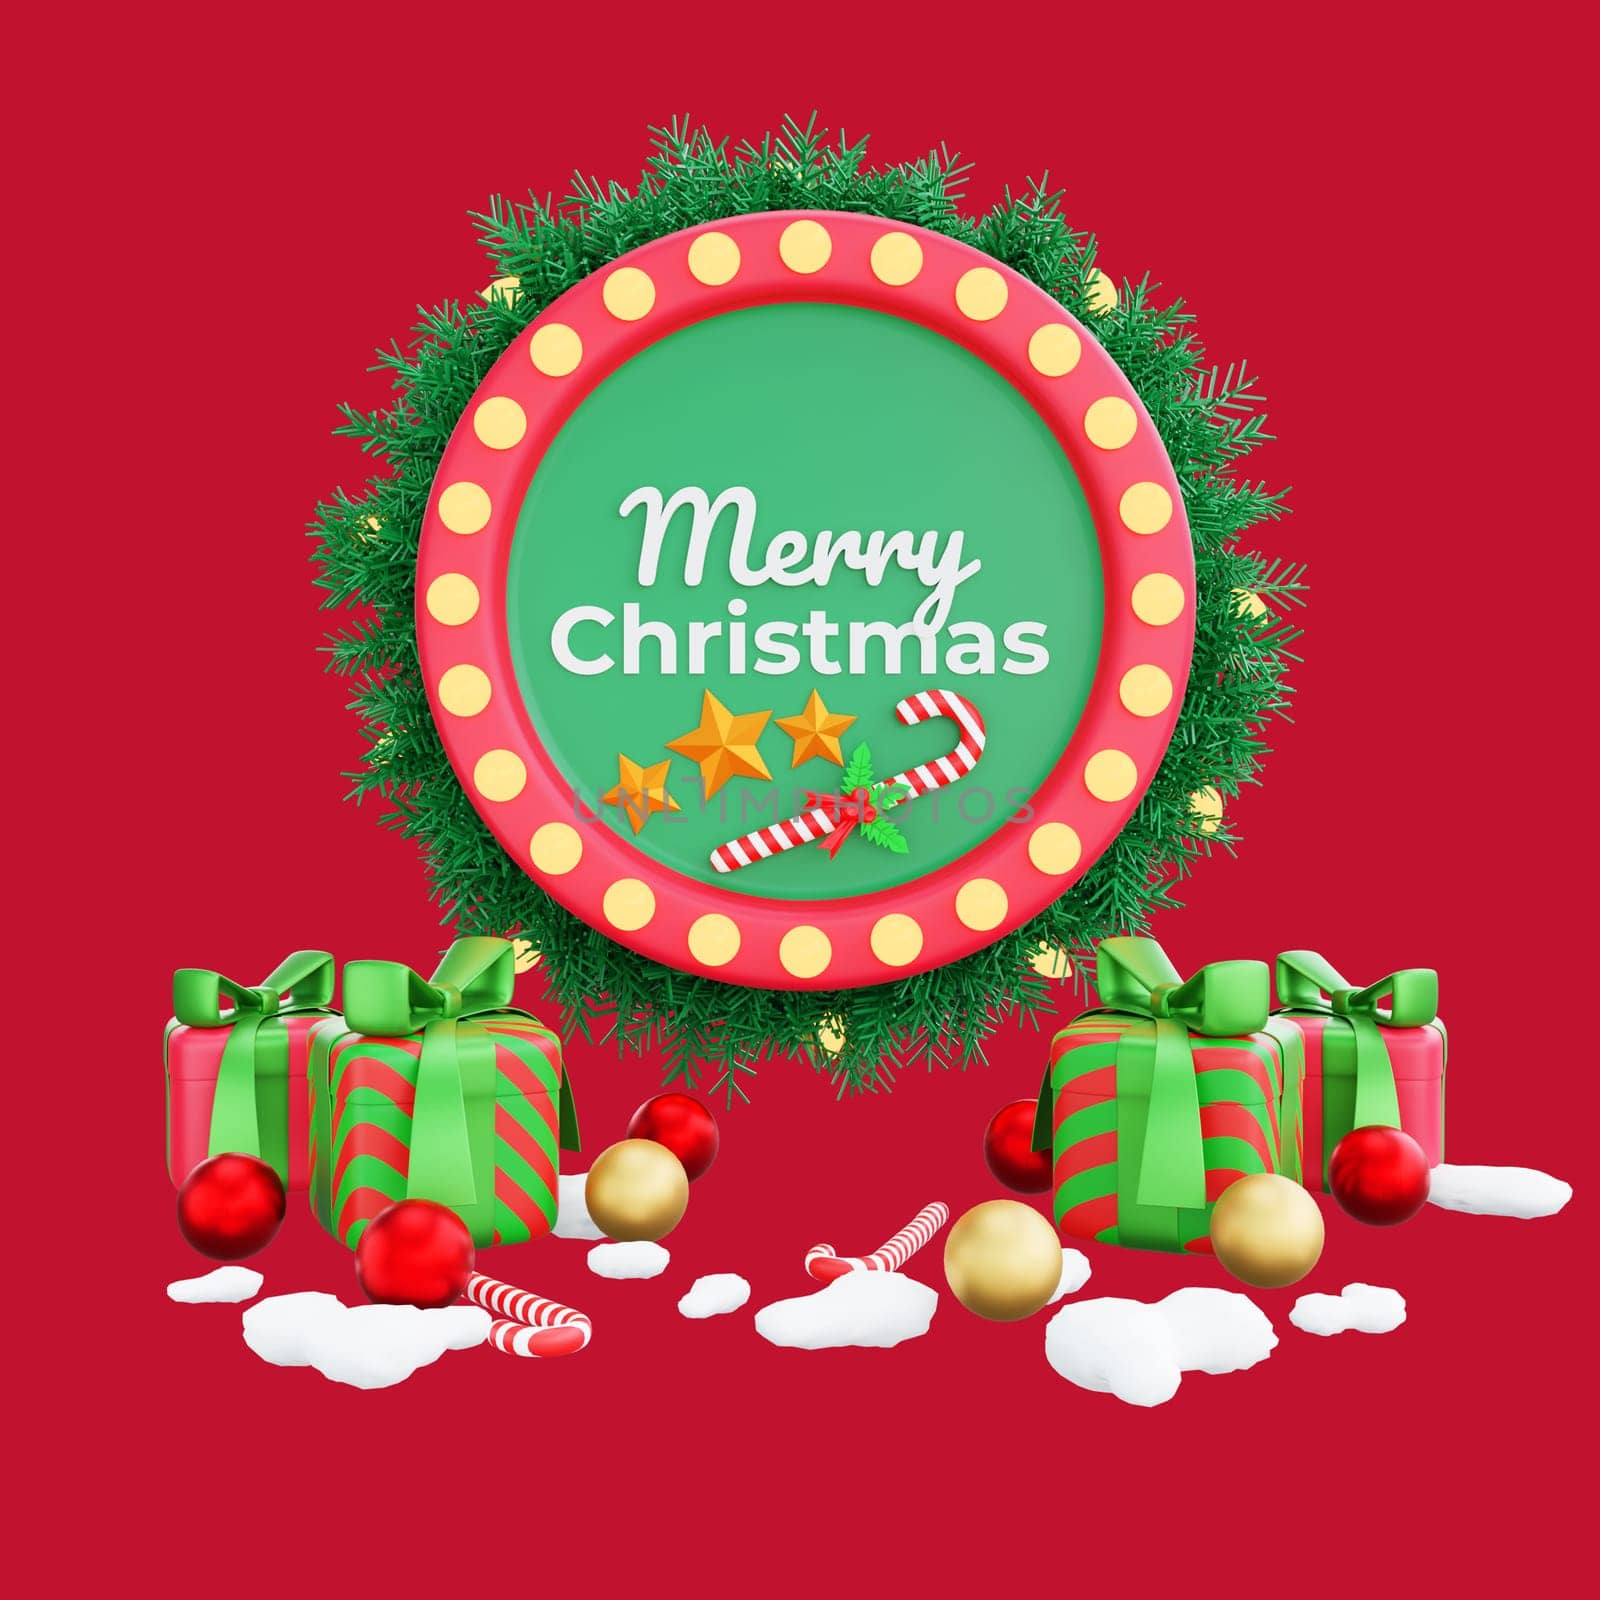 3D illustration of a festive Christmas wreath greetings decoration by Rahmat_Djayusman